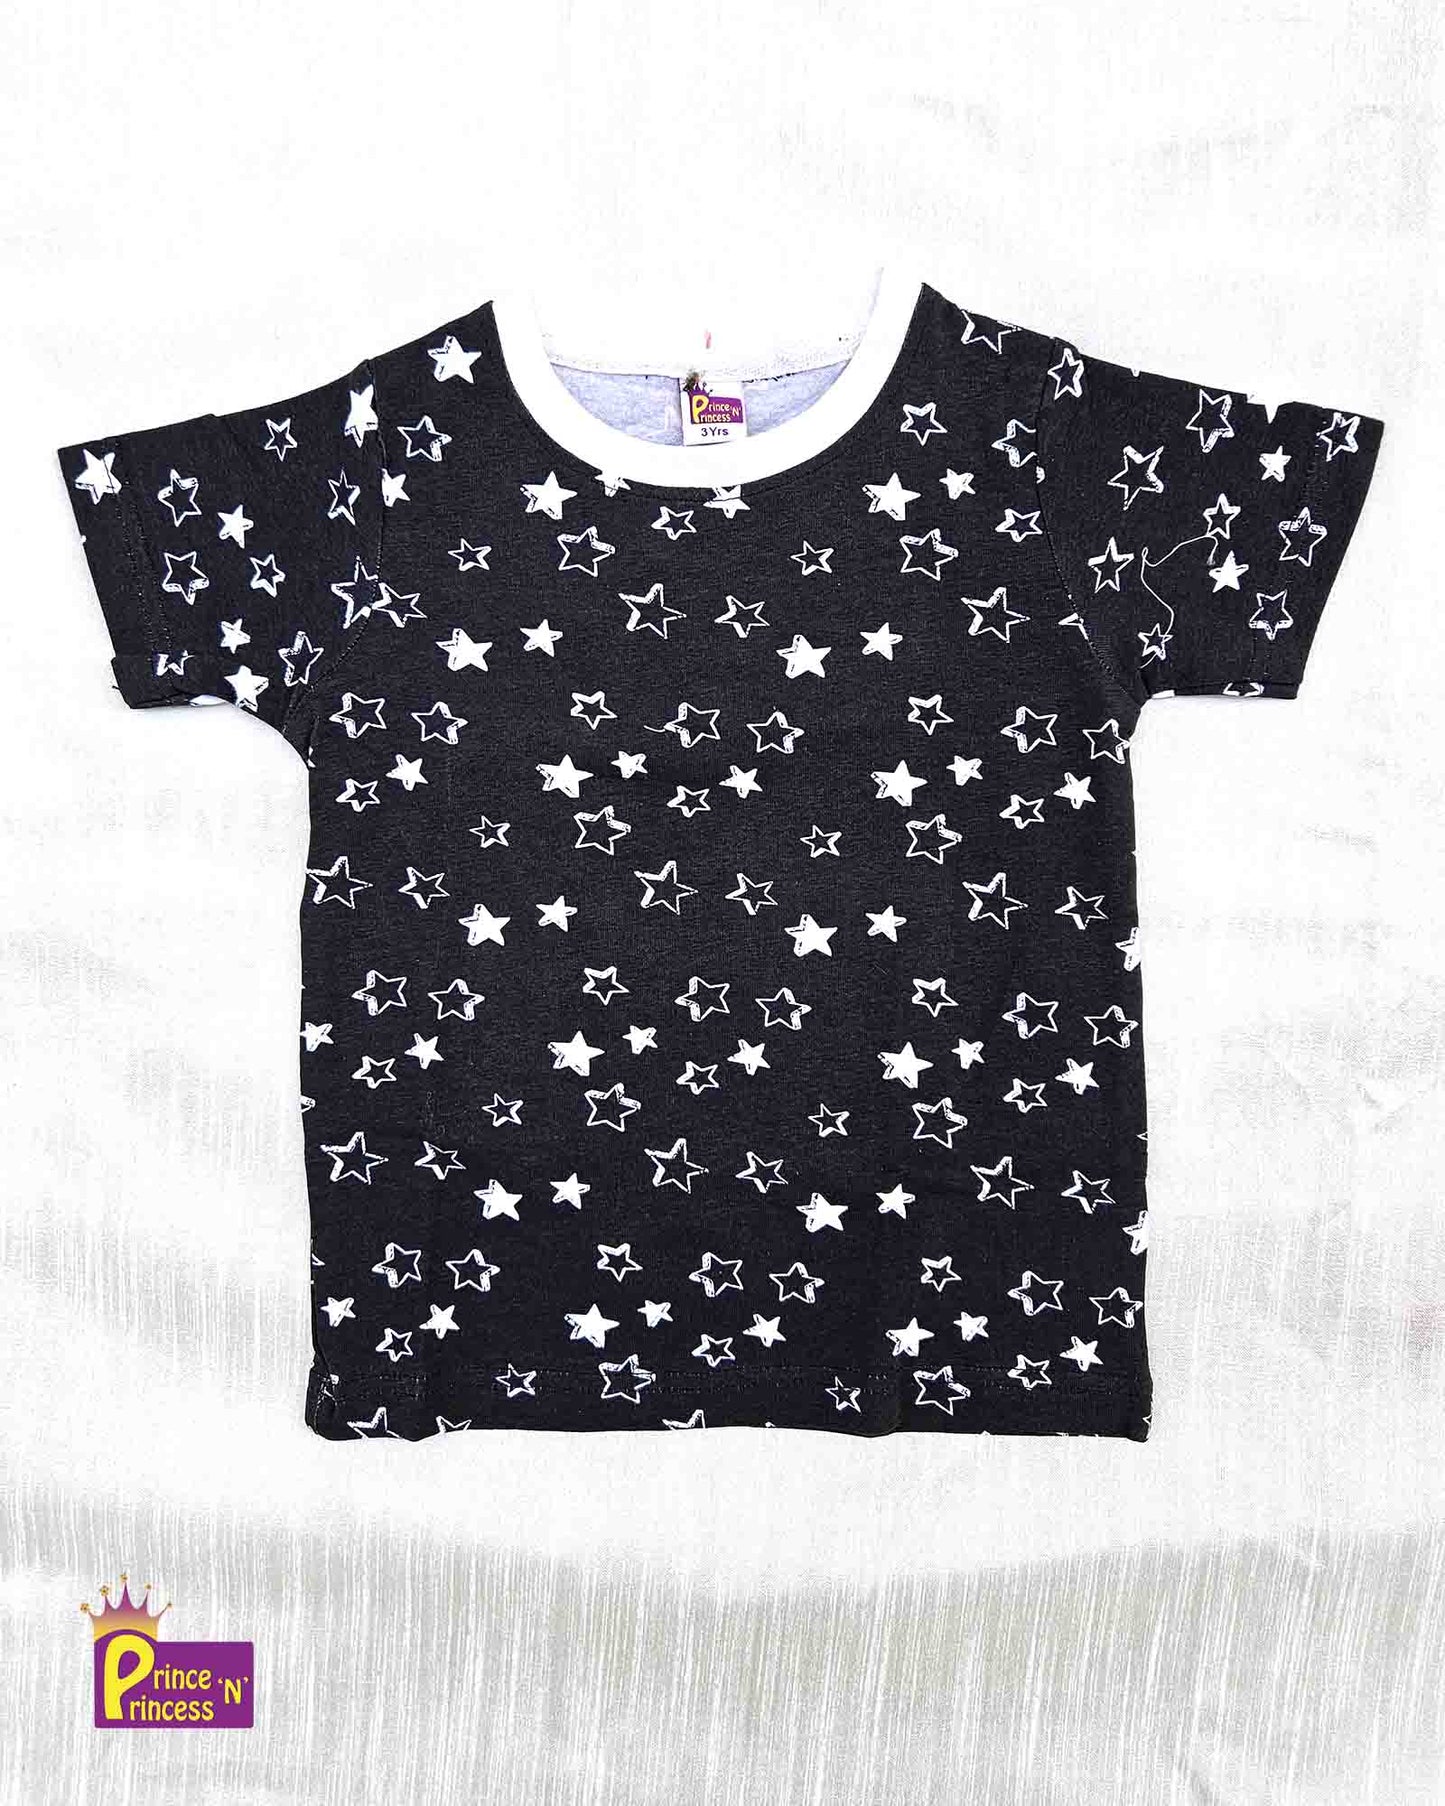 Boys Black Printed T Shirt  TS074 Prince N Princess